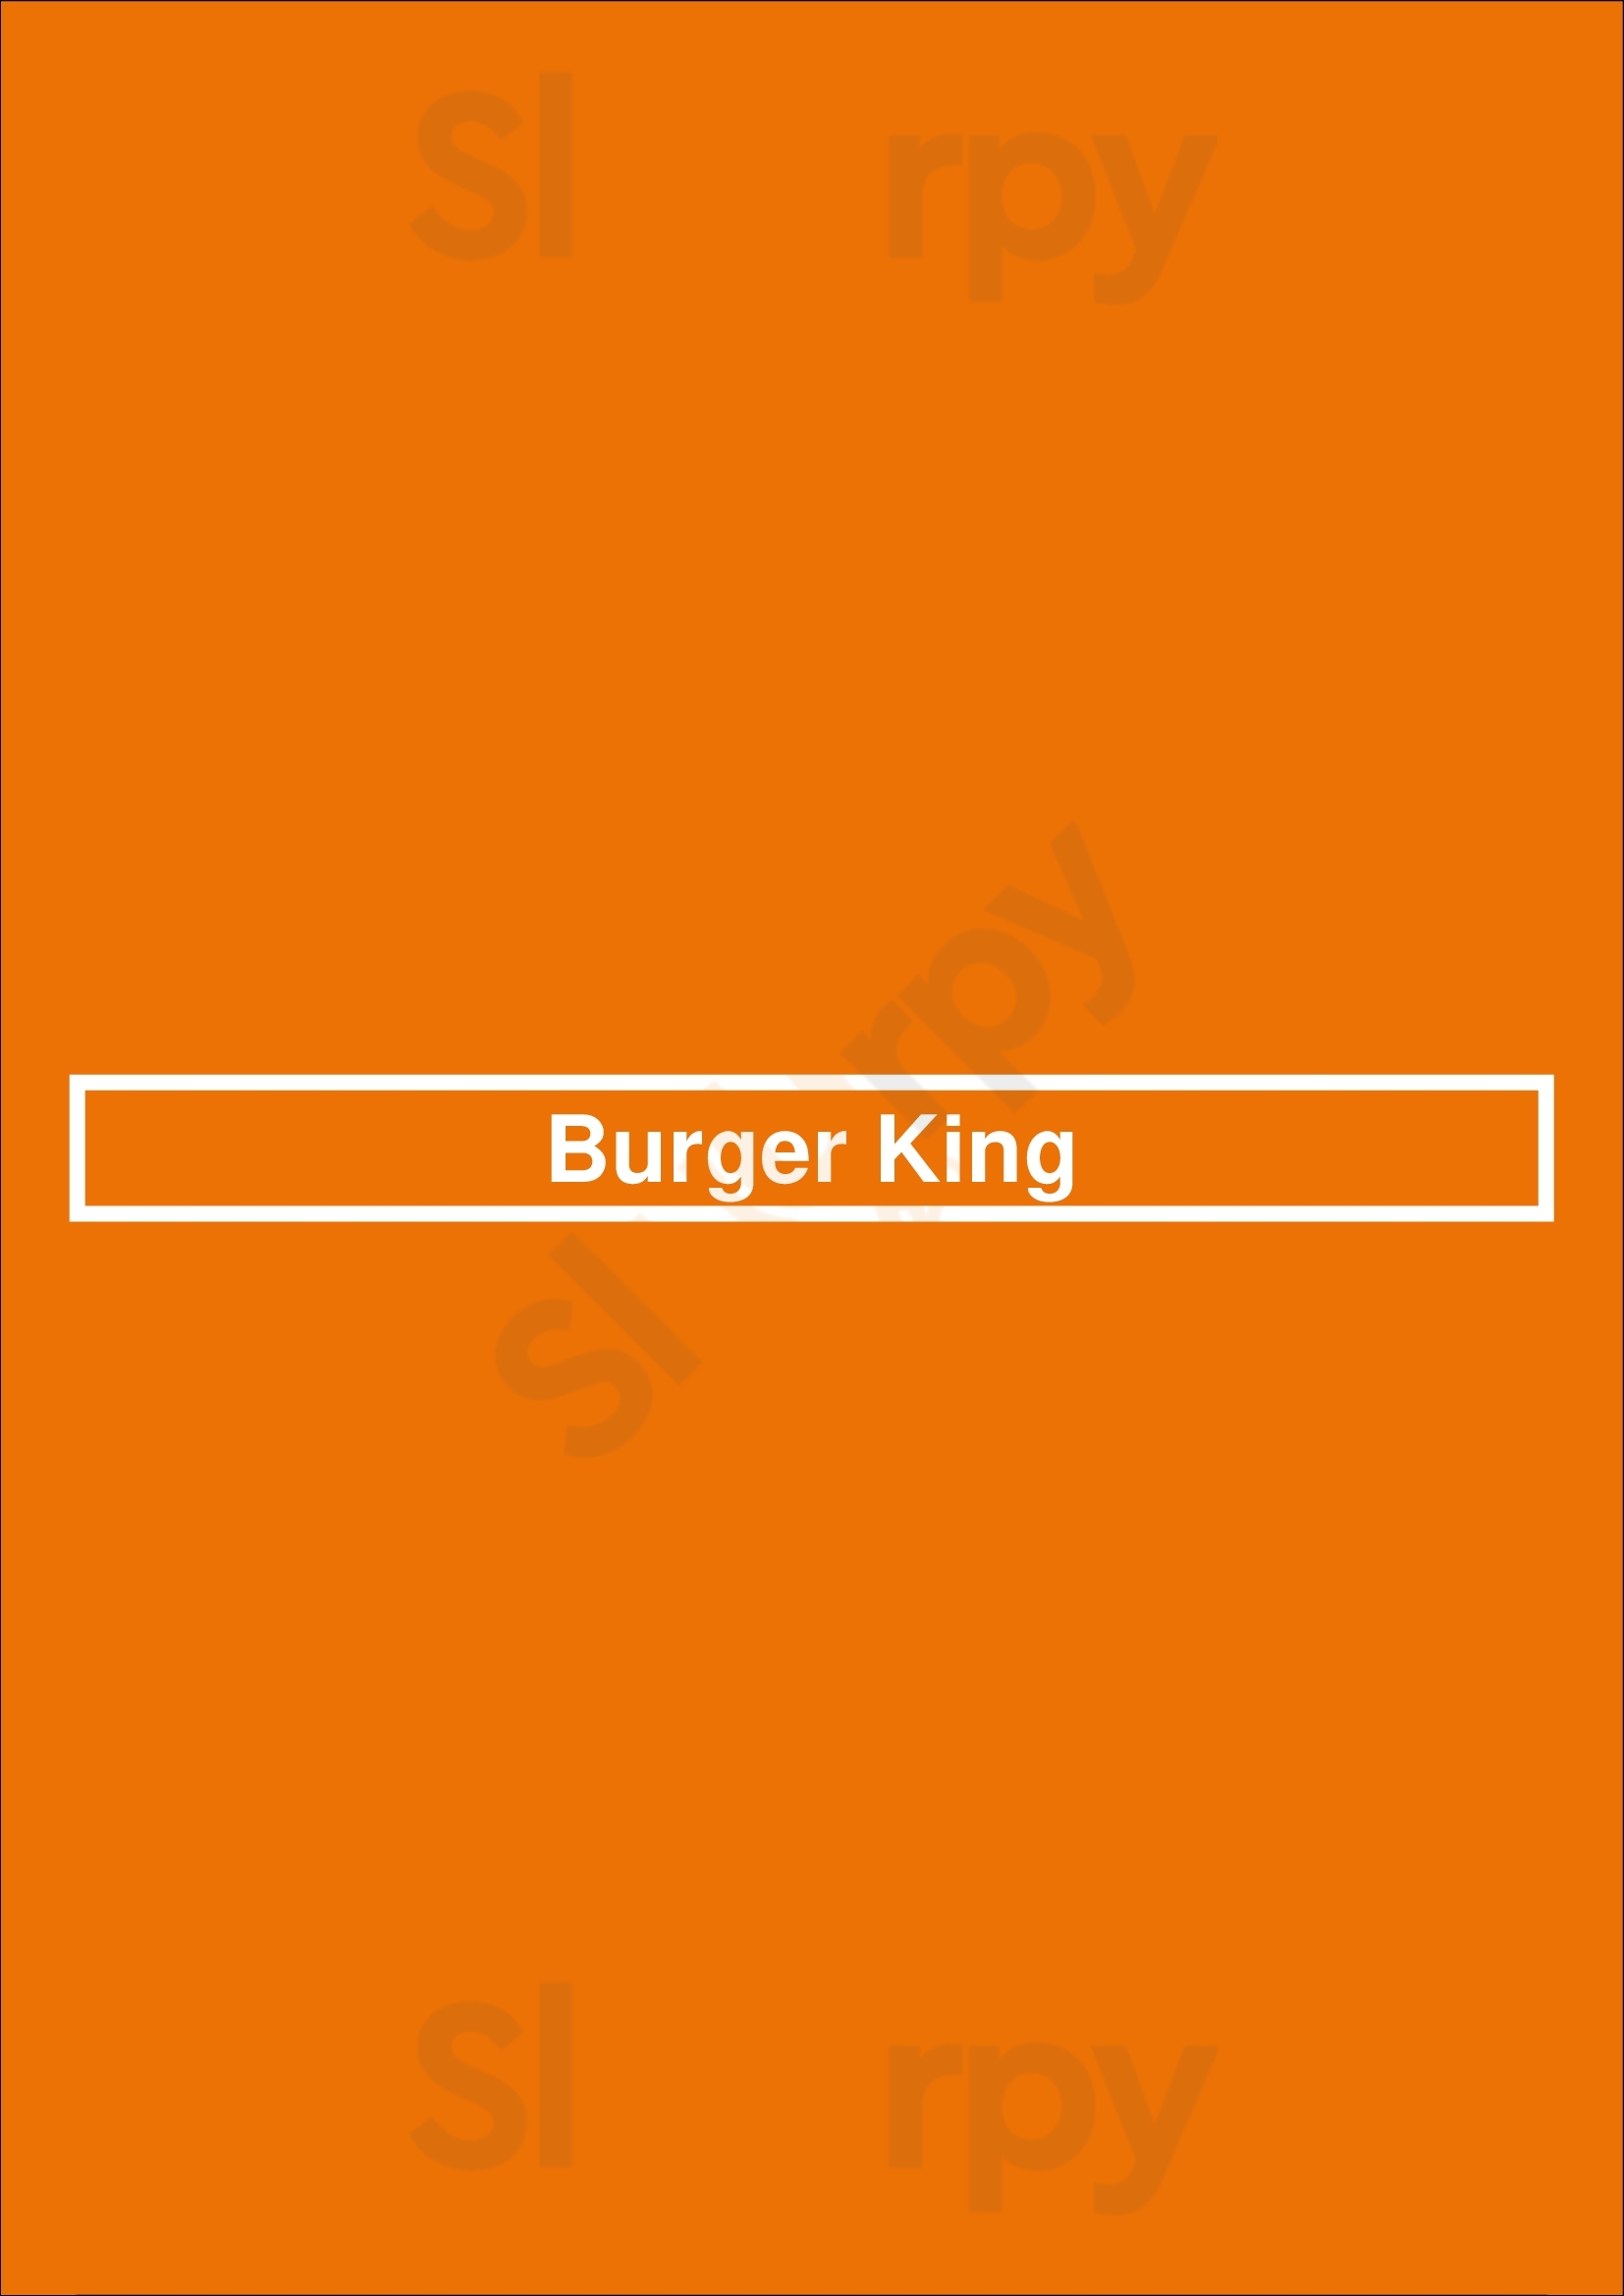 Burger King Atlanta Menu - 1